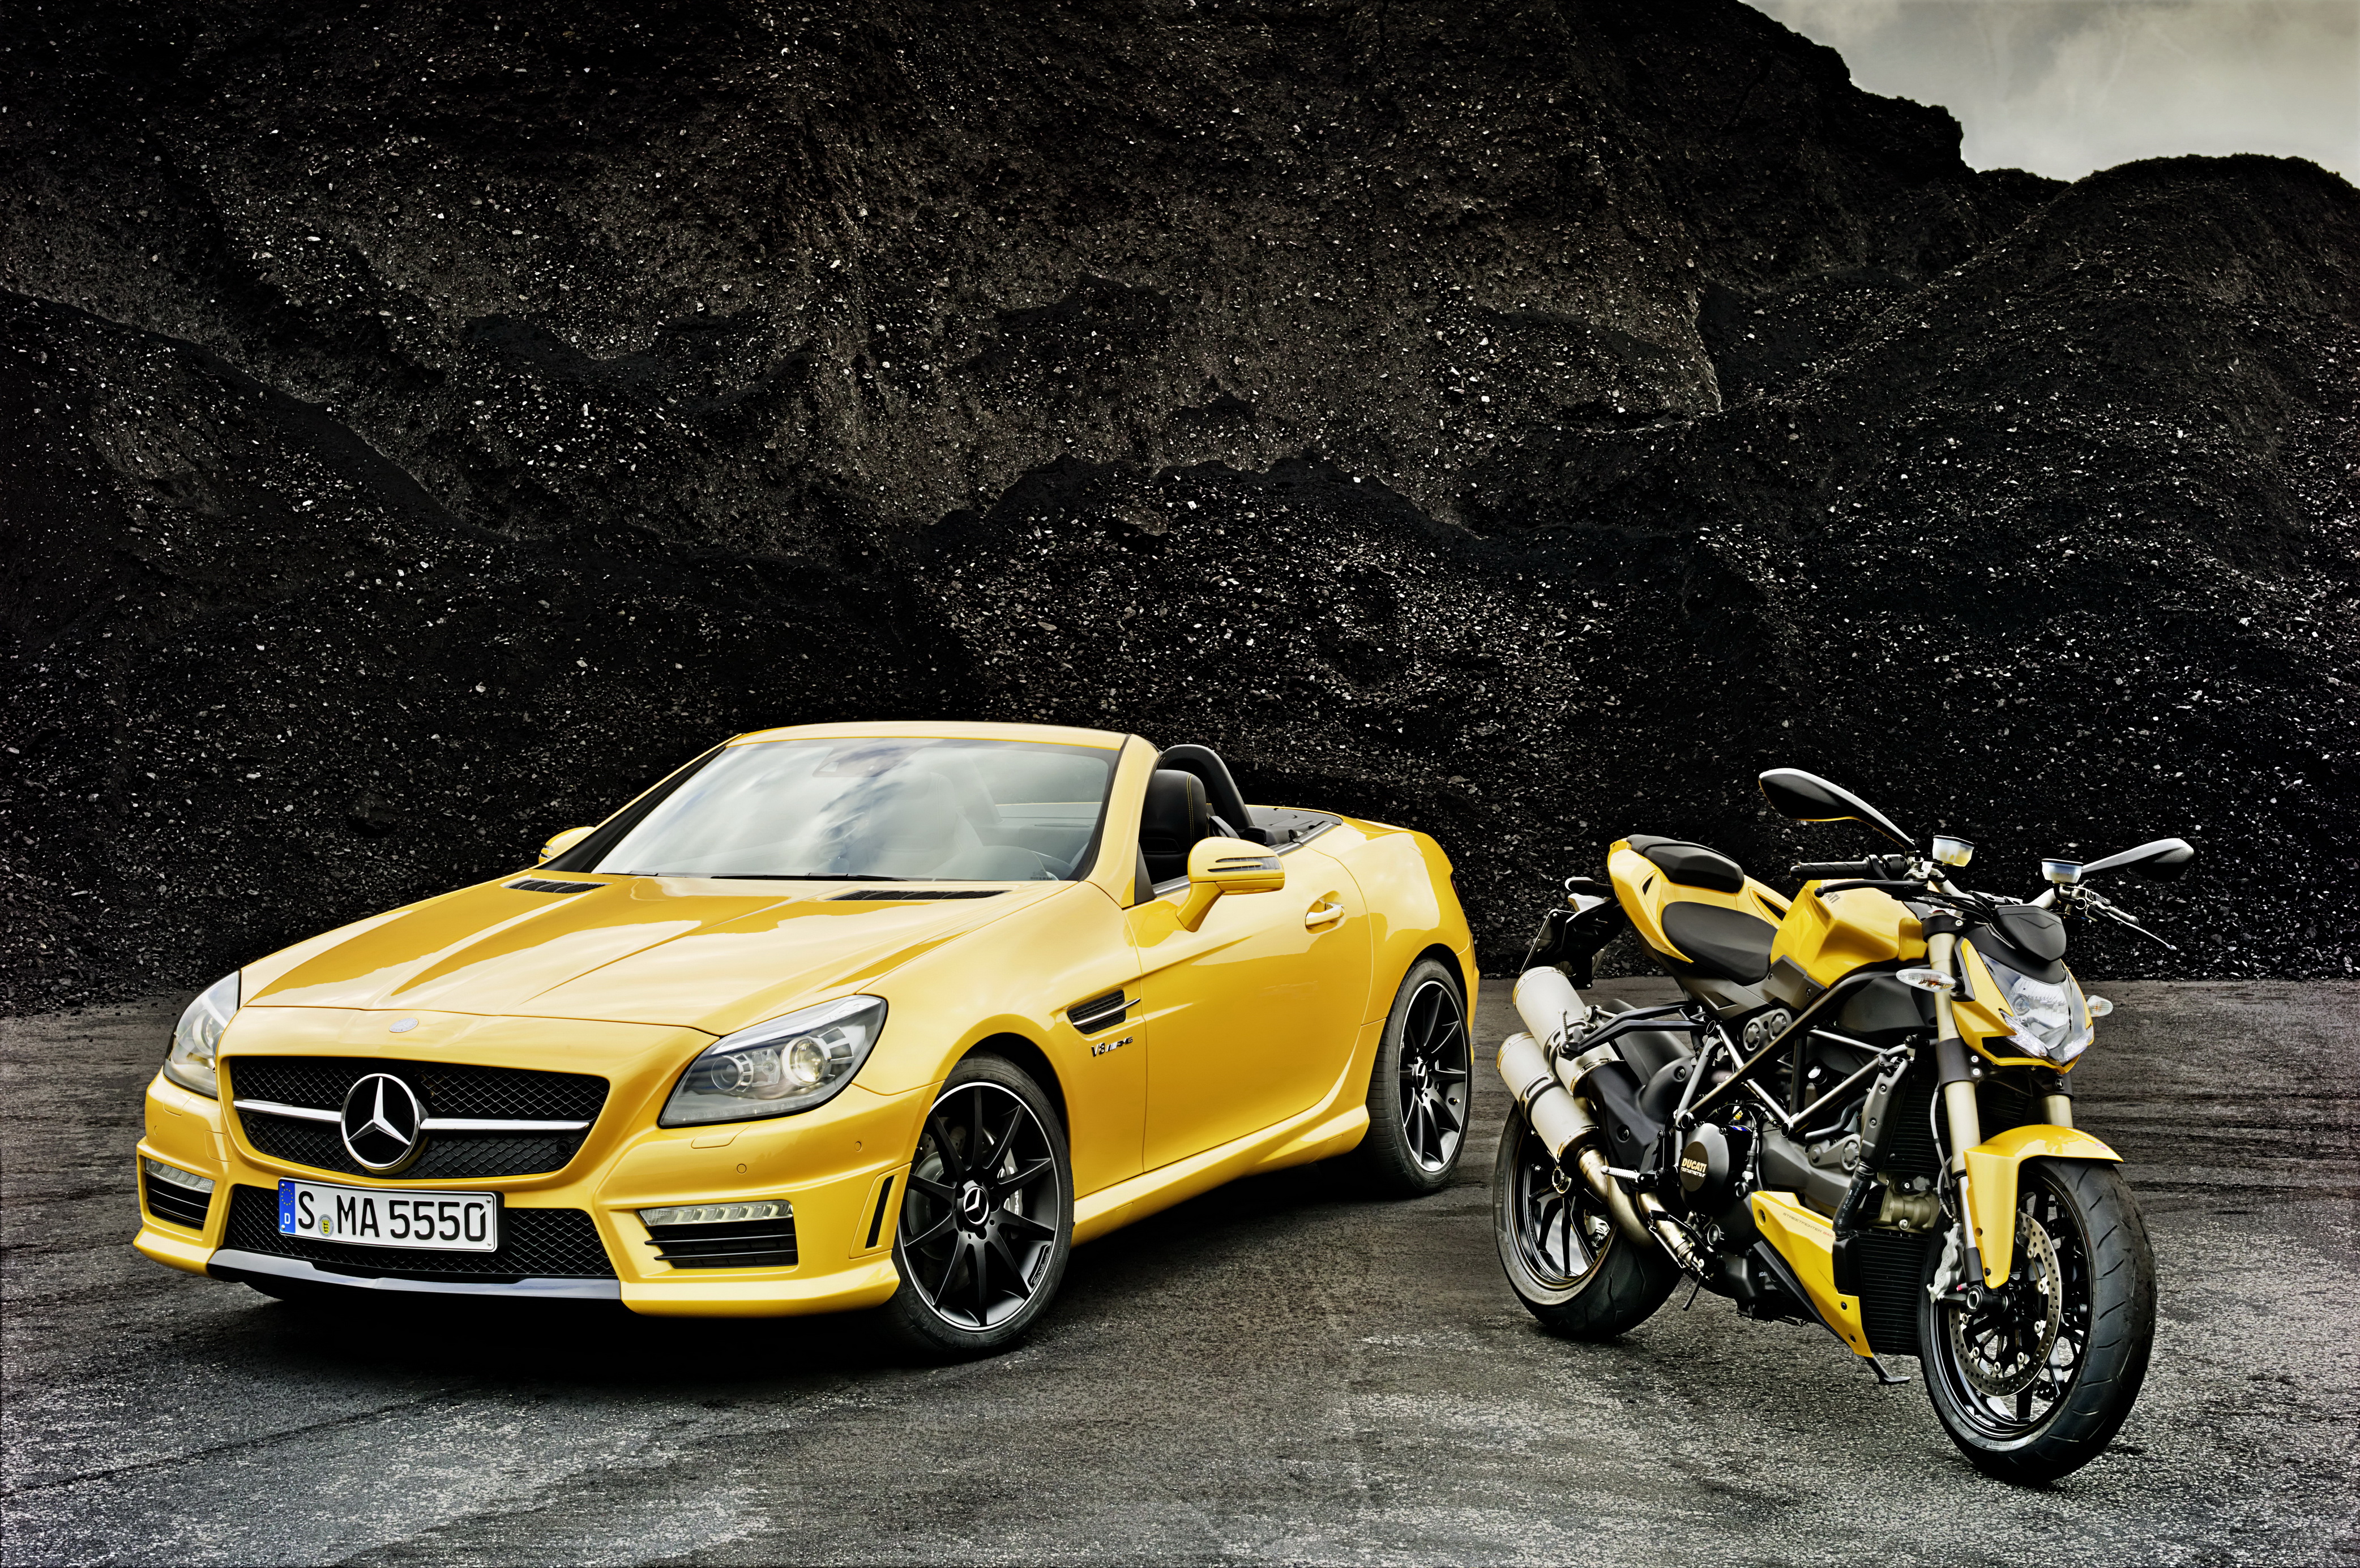 Moto auto. Mercedes Benz SLK 55 AMG. Мотоцикл Мерседес АМГ. Мерседес SLK желтый. Желтый Мерседес кабриолет.